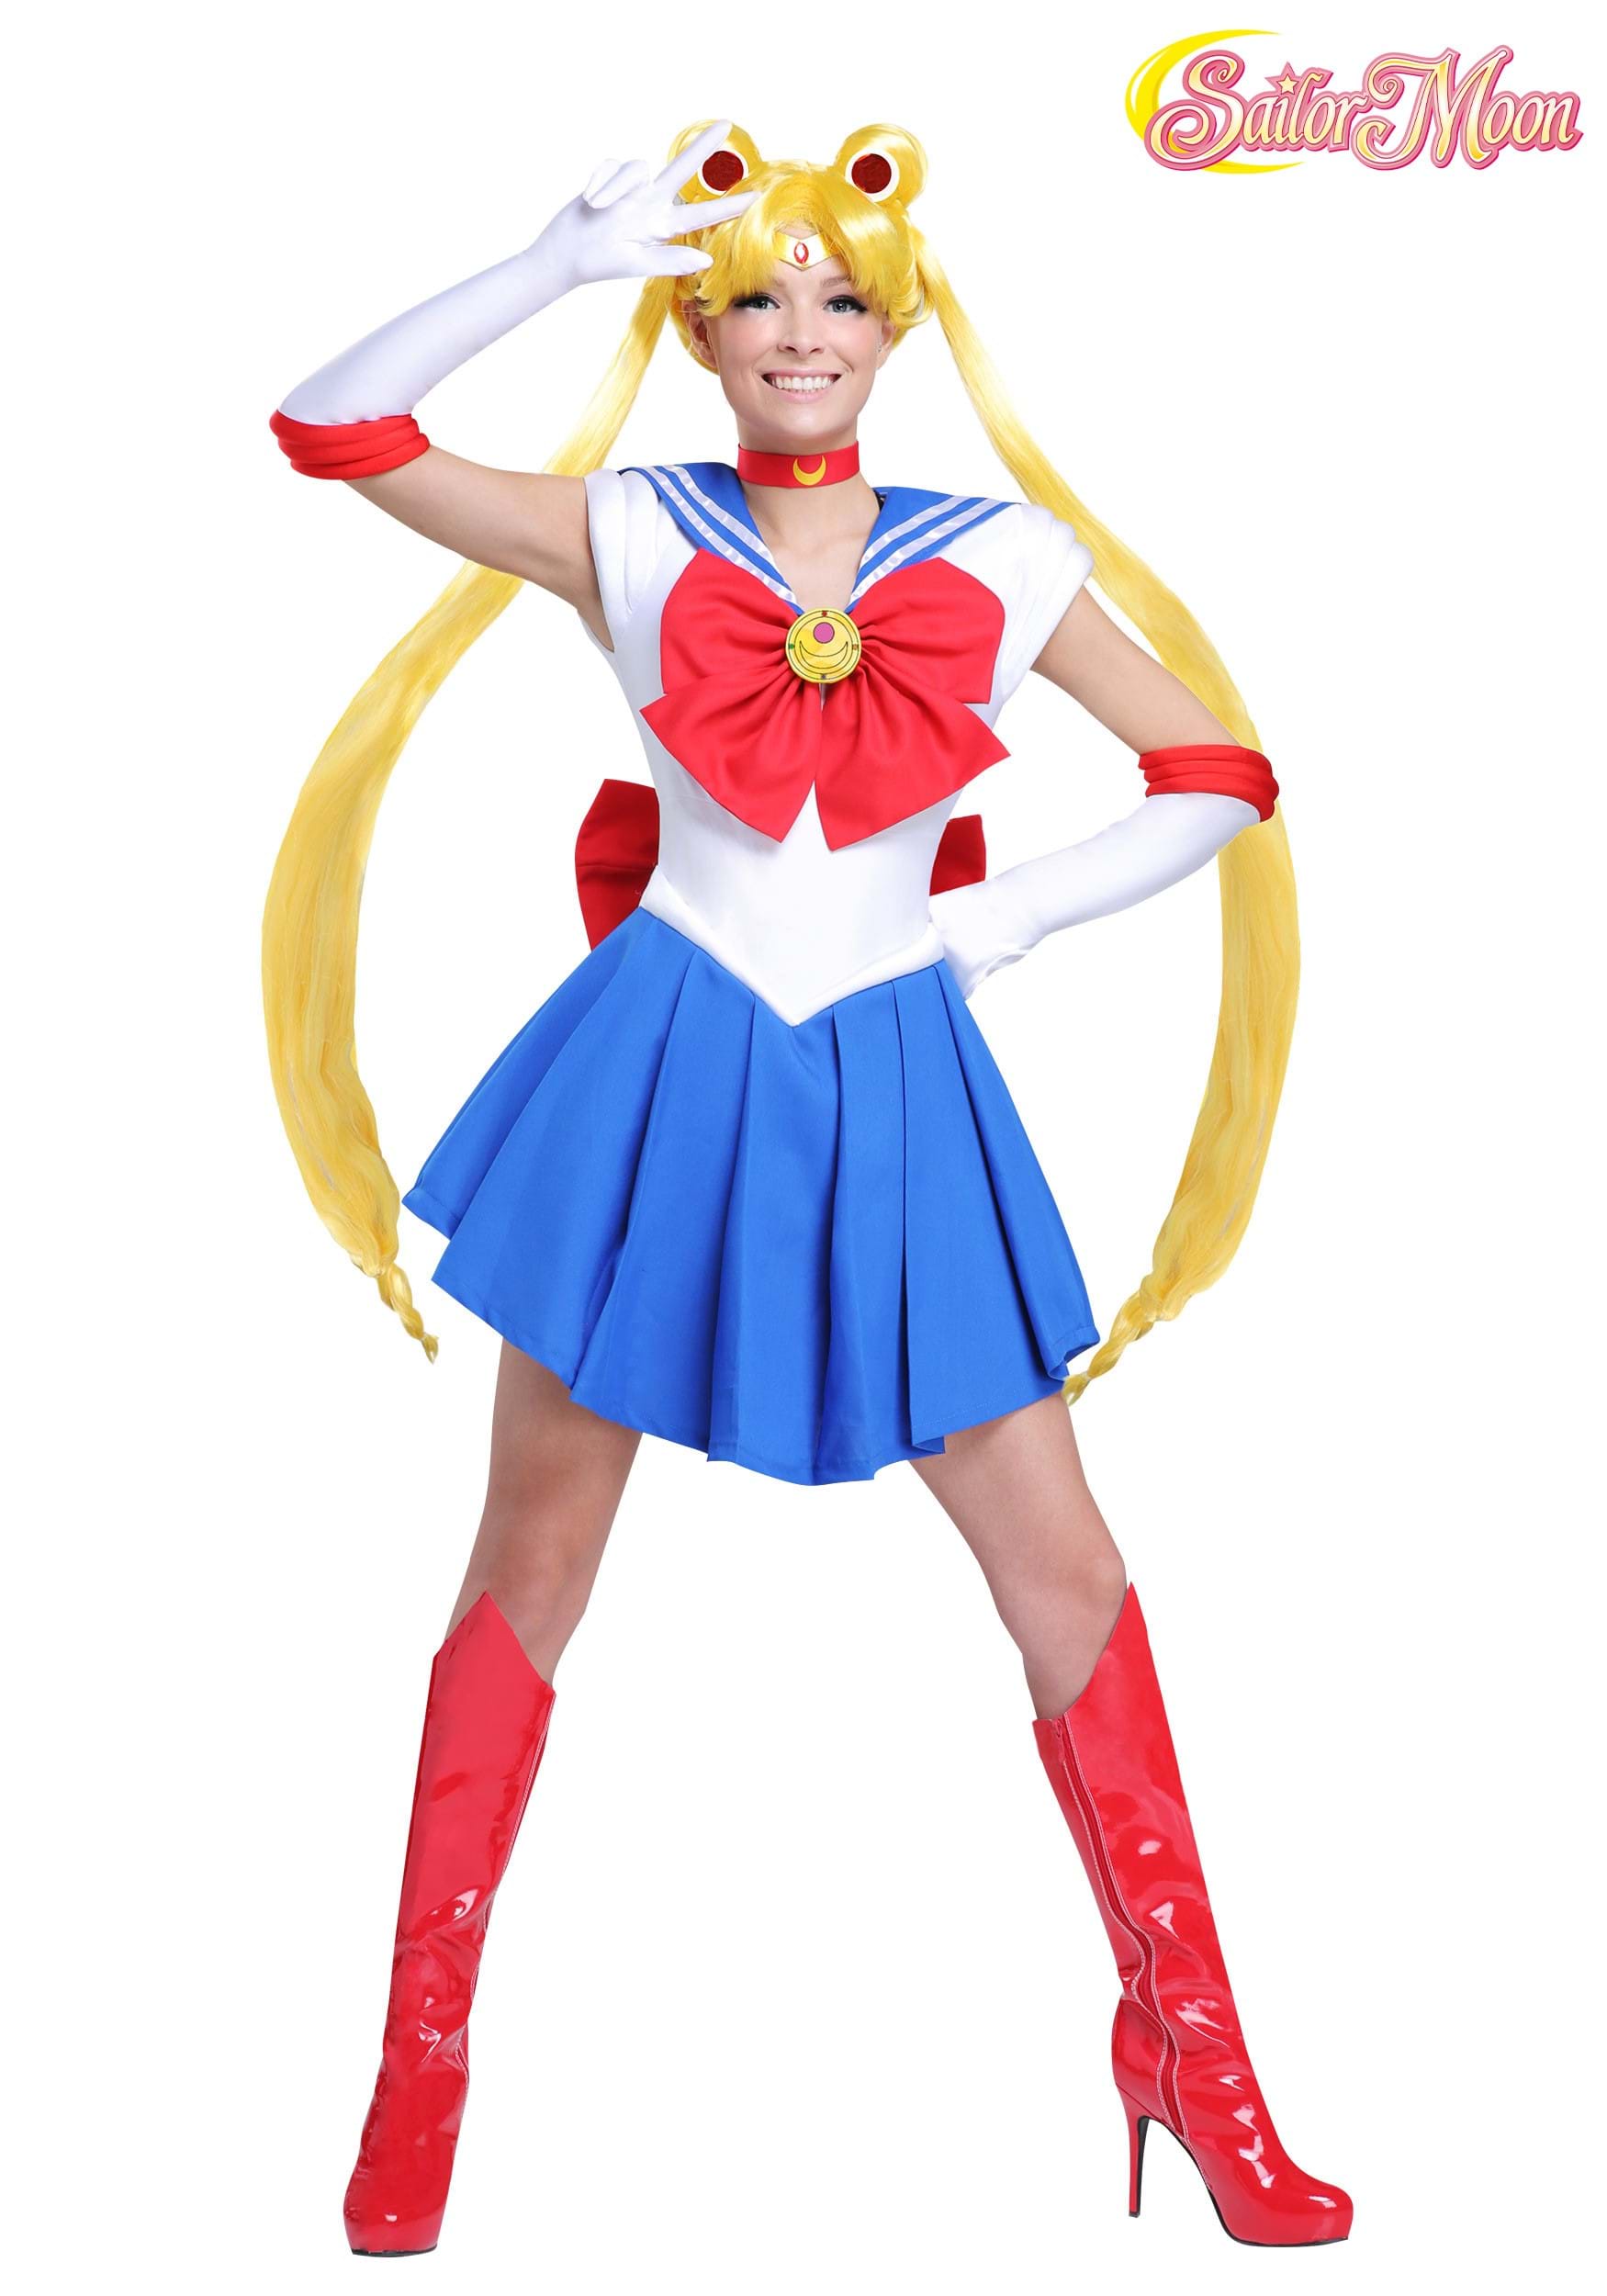 Sailor Moon Cosplay Telegraph